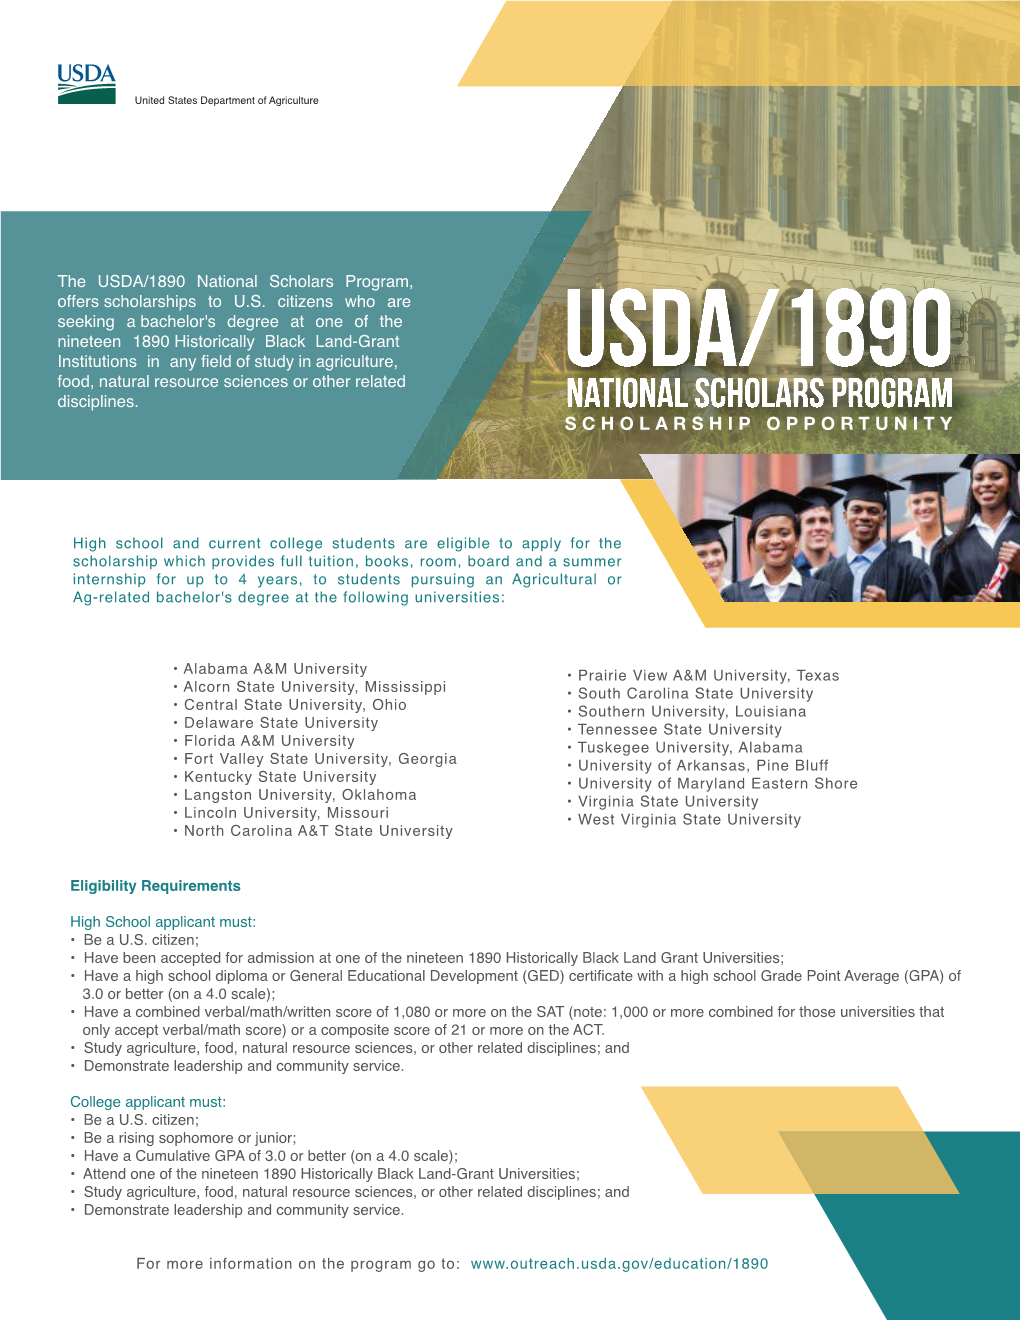 The USDA/1890 National Scholars Program, Offers Scholarships to U.S